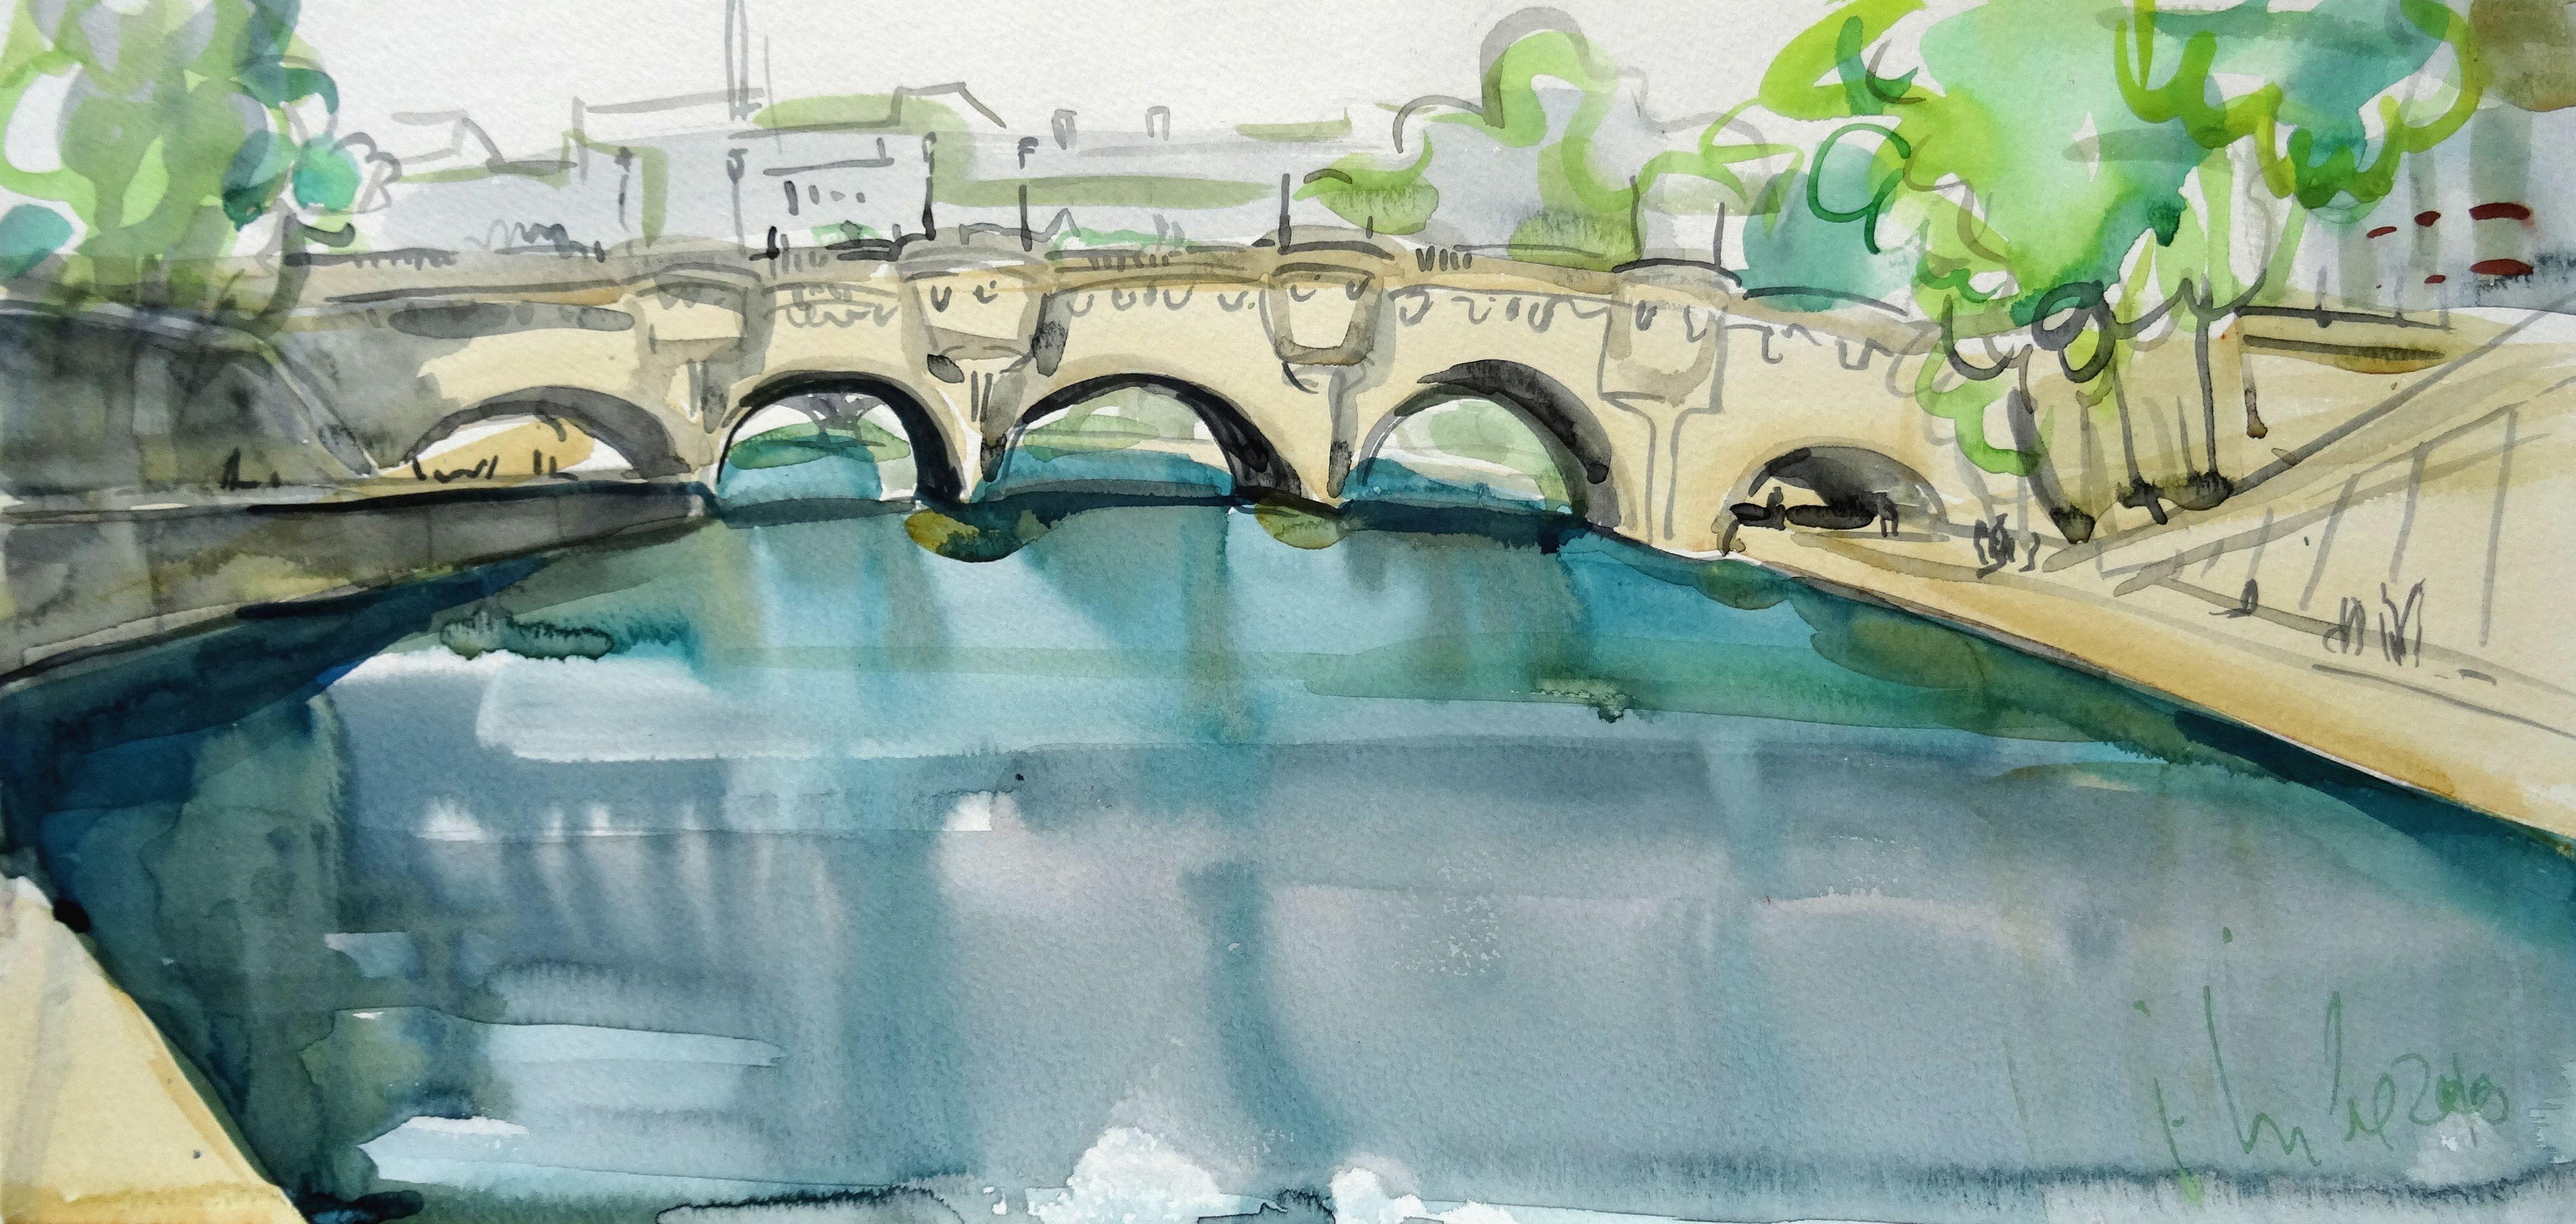 Pont Neuf Paris. 2010. Aquarell auf Papier, 60,96 x 60,96 cm